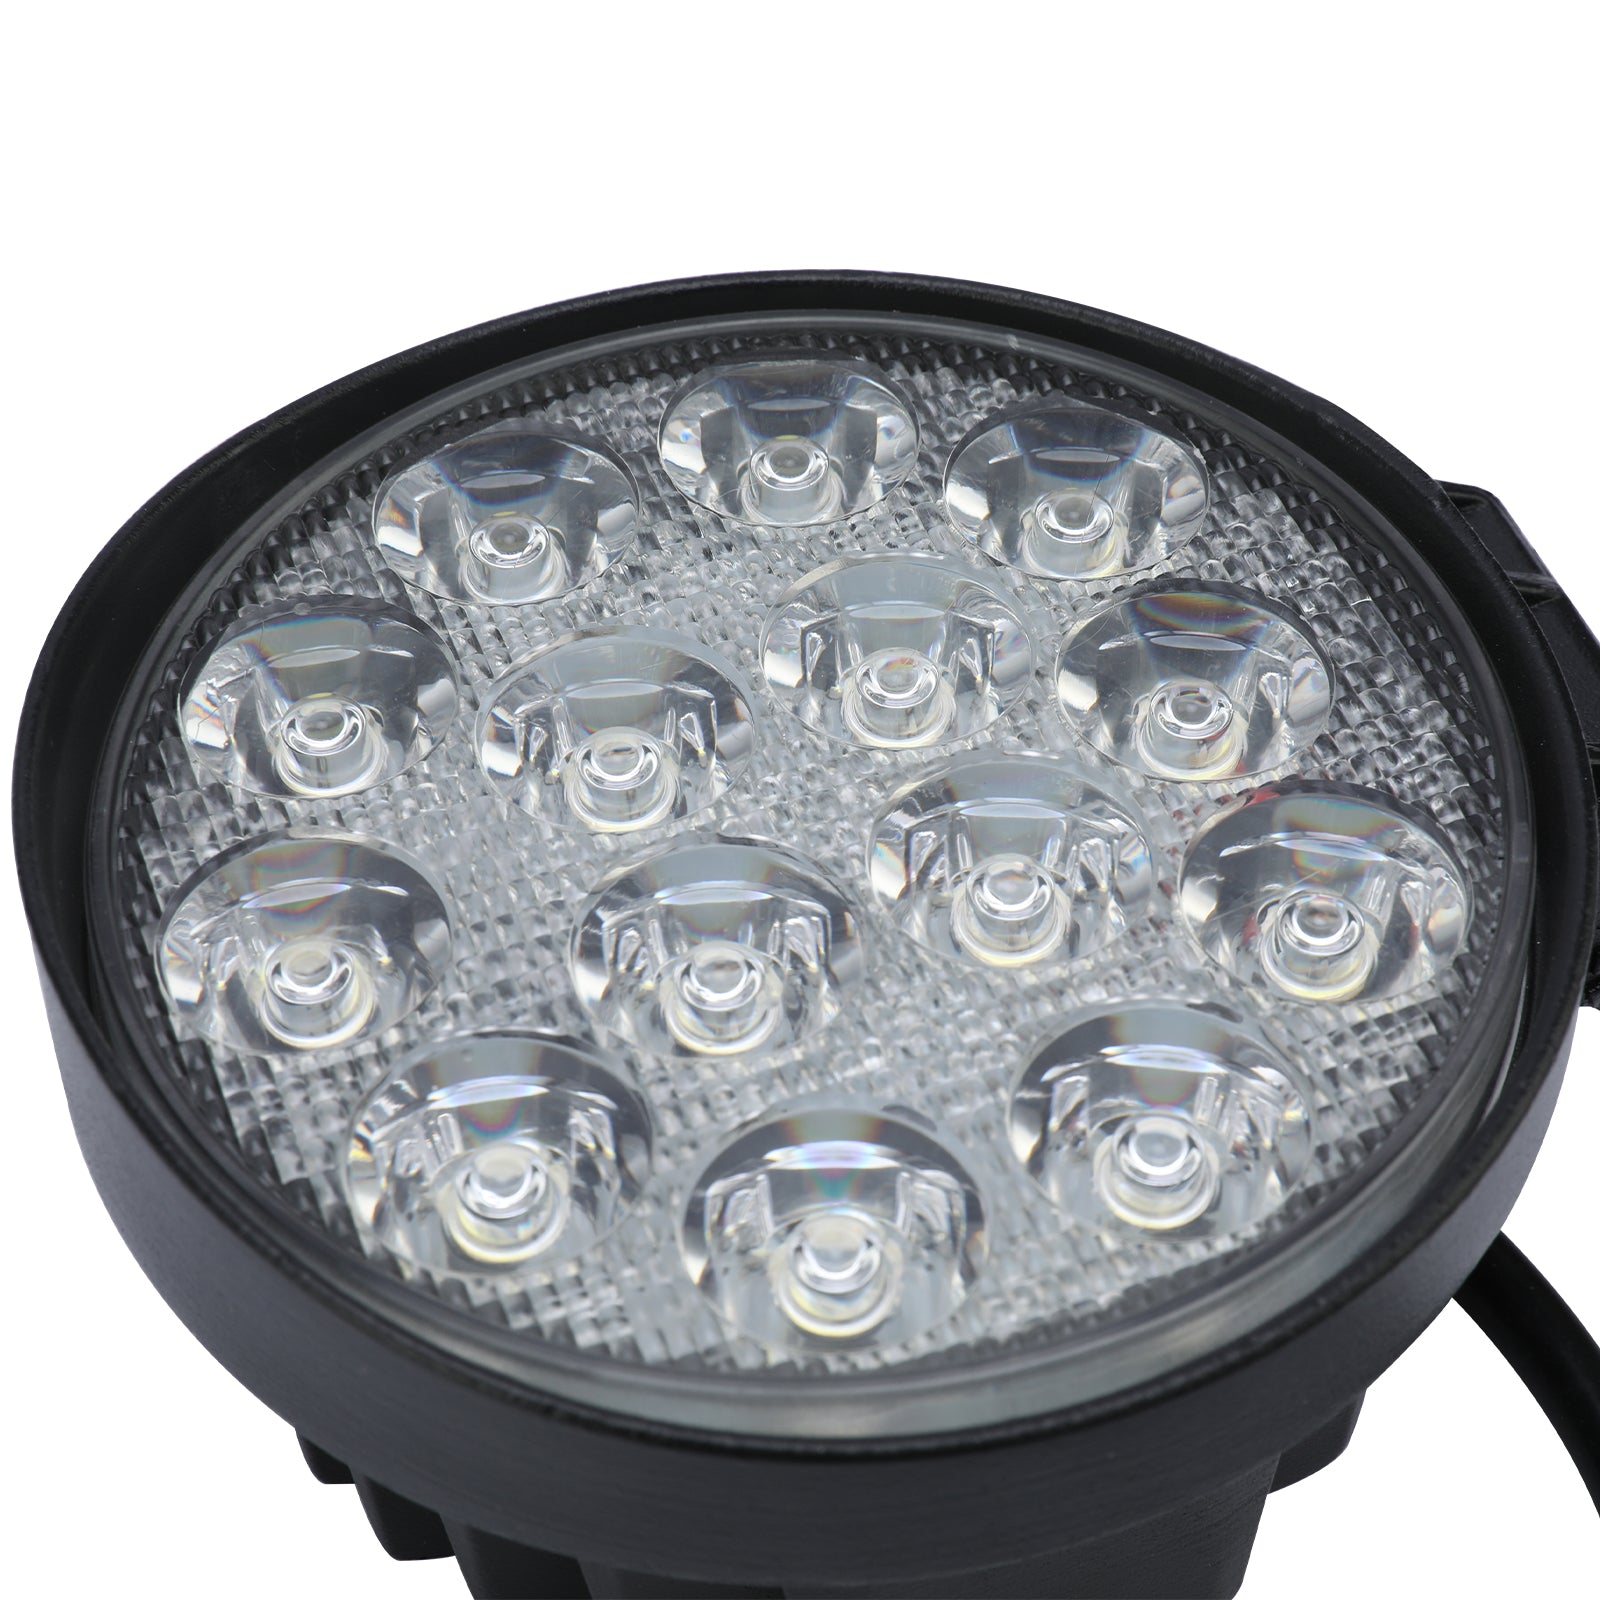 Led Work Light 4.5-inch Flood LED Lighting Off Road Driving Light  for Offroader, Truck, Car, ATV, SUV, Jeep LED Light Bulbs OPENROAD   